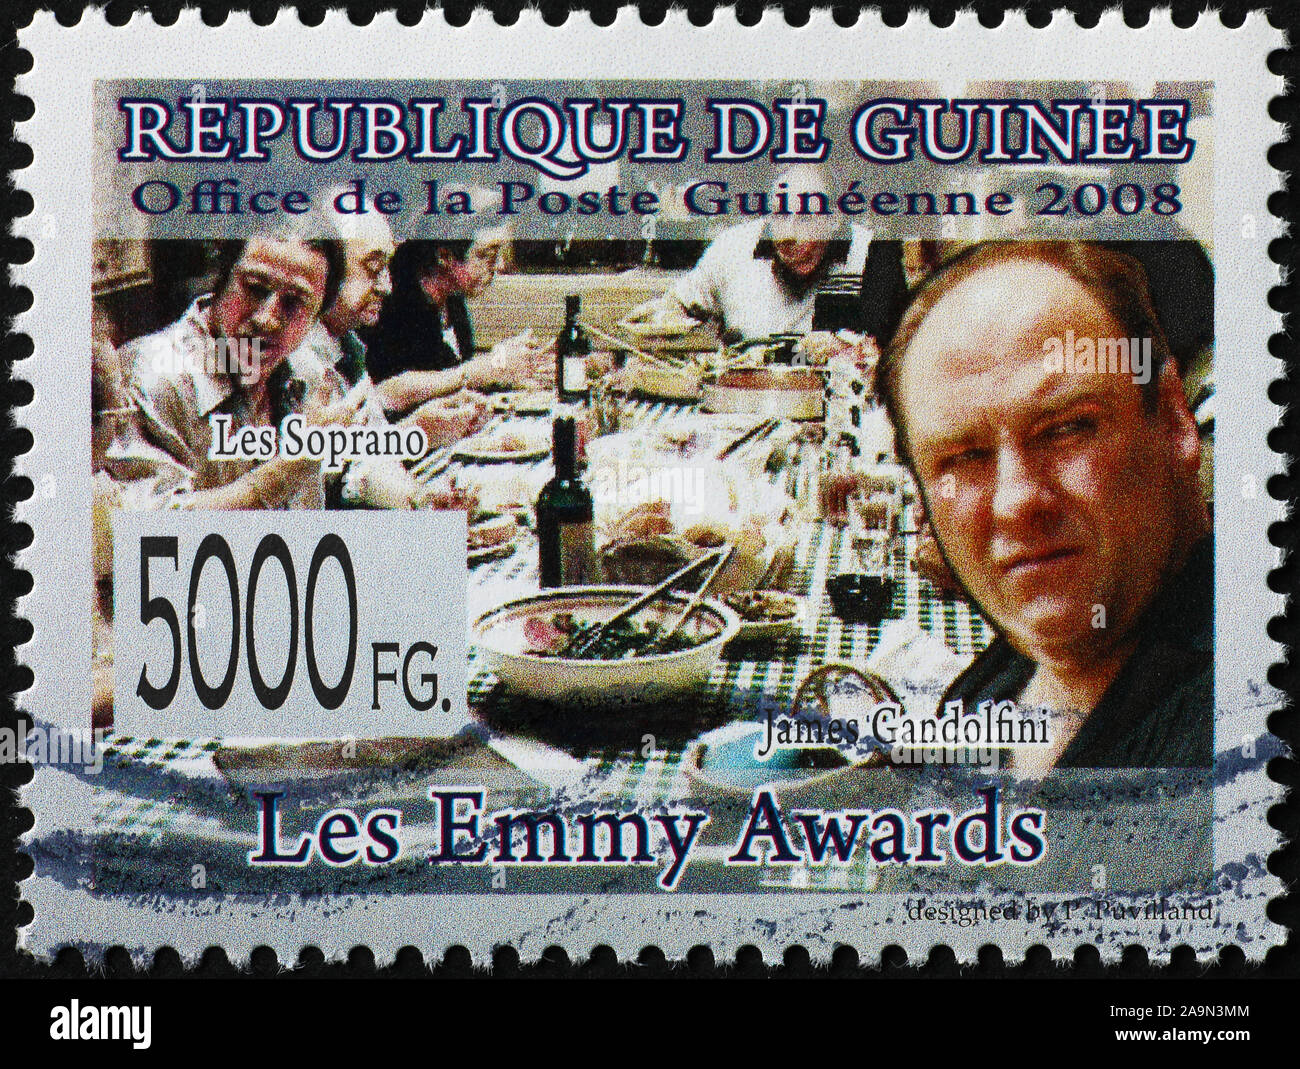 James Gandolfini on postage stamp Stock Photo